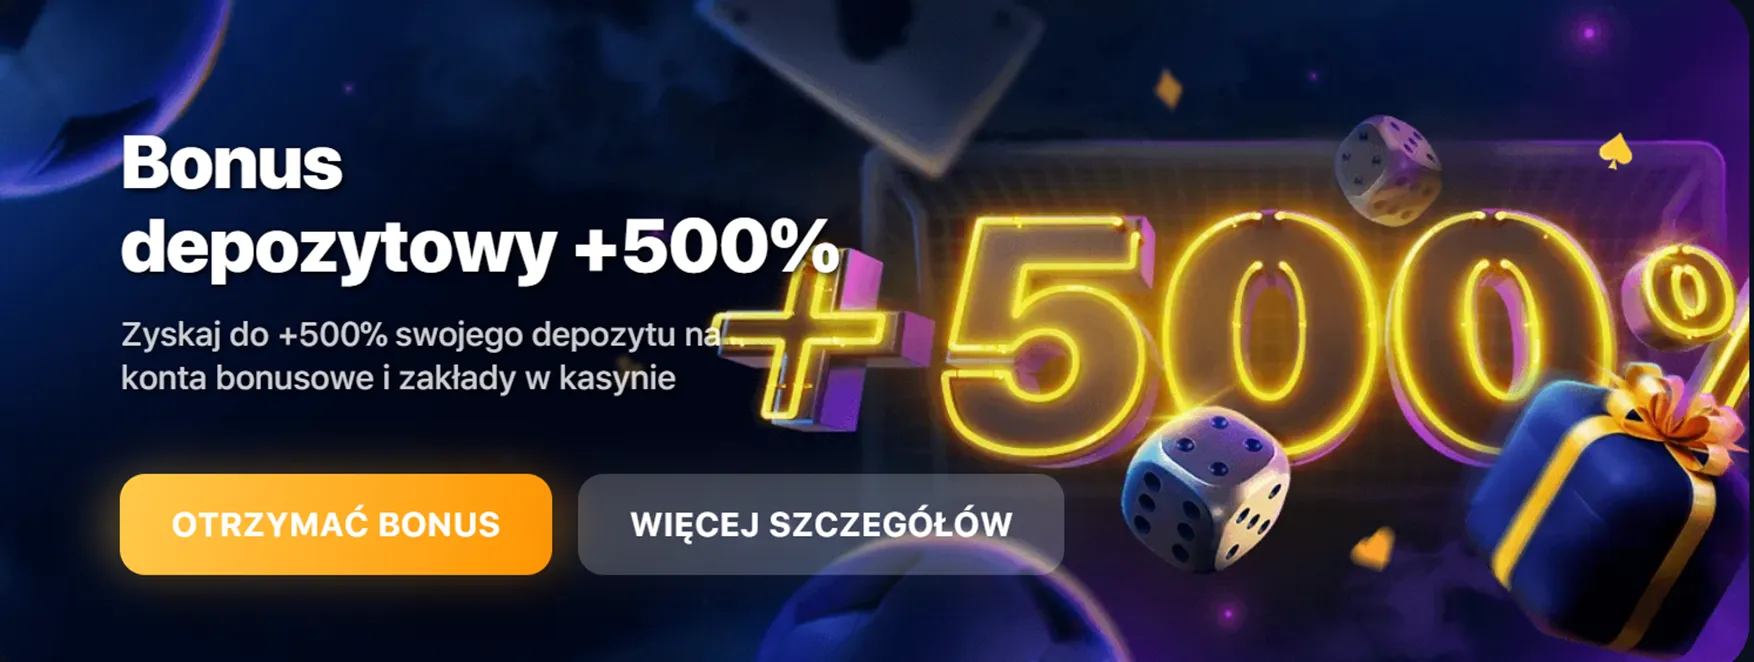 1win bonus 500